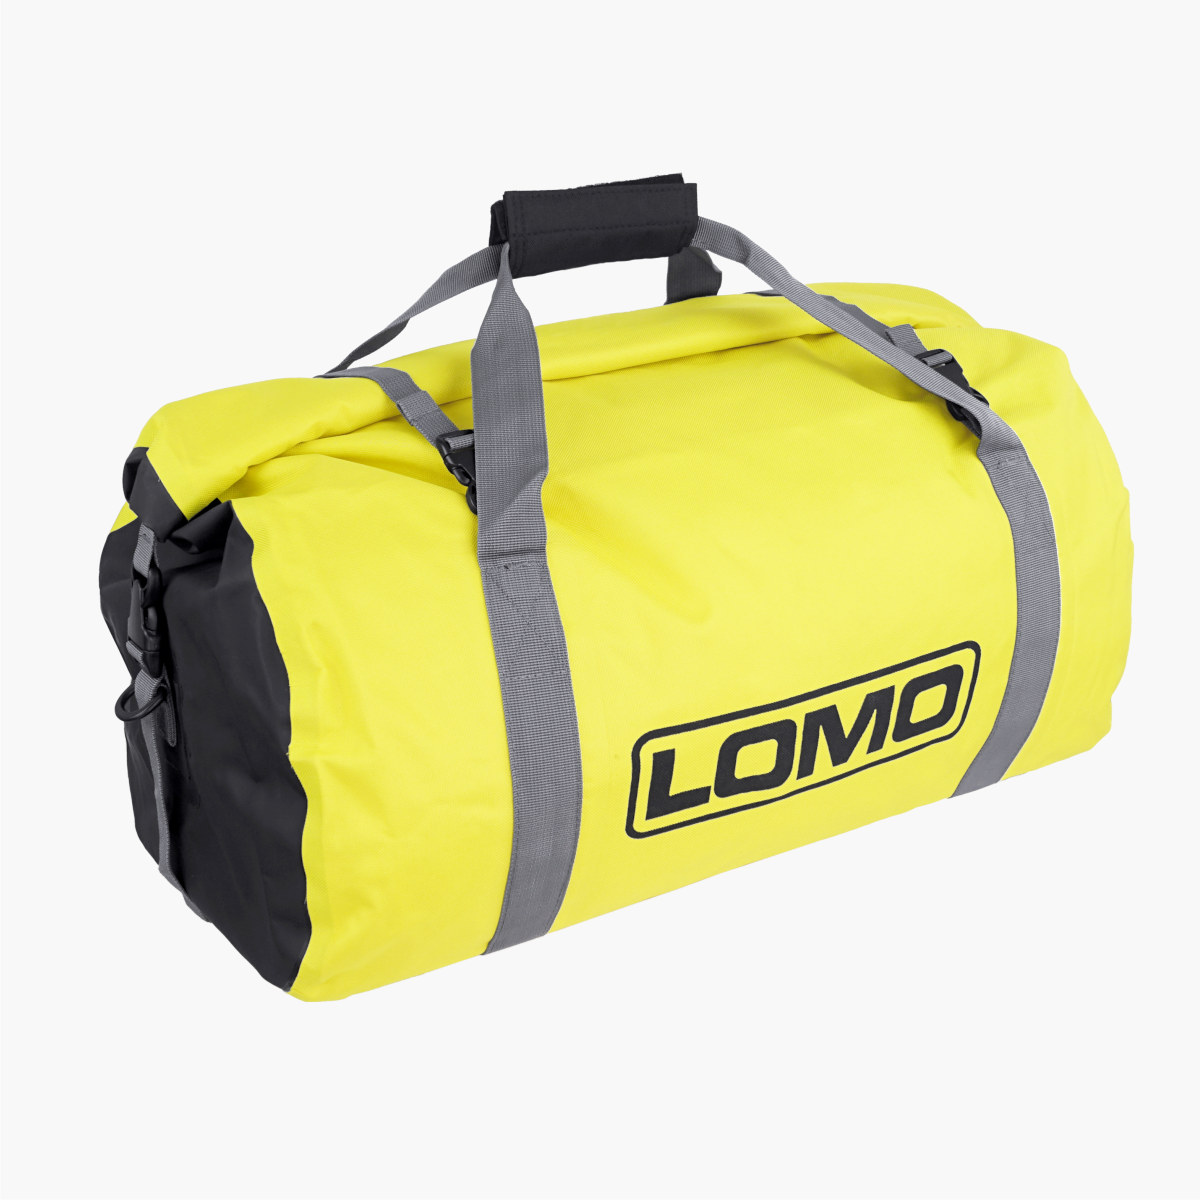 Dry Bag Holdalls | Lomo Watersport UK. Wetsuits, Dry Bags & Outdoor Gear.